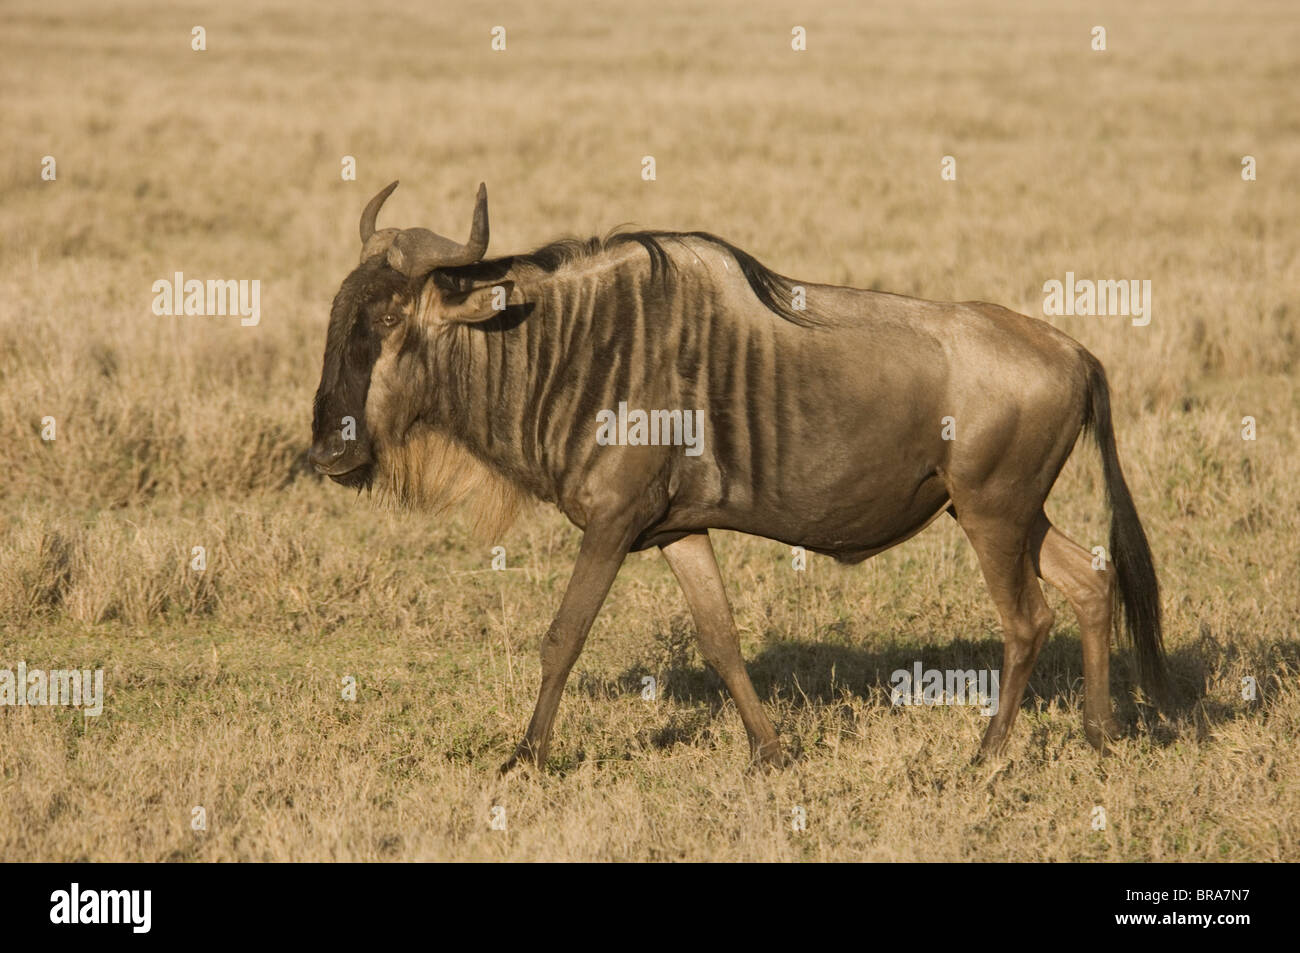 FULL BODY PROFILE OF GNU WILDEBEEST SERENGETI TANZANIA AFRICA Stock Photo